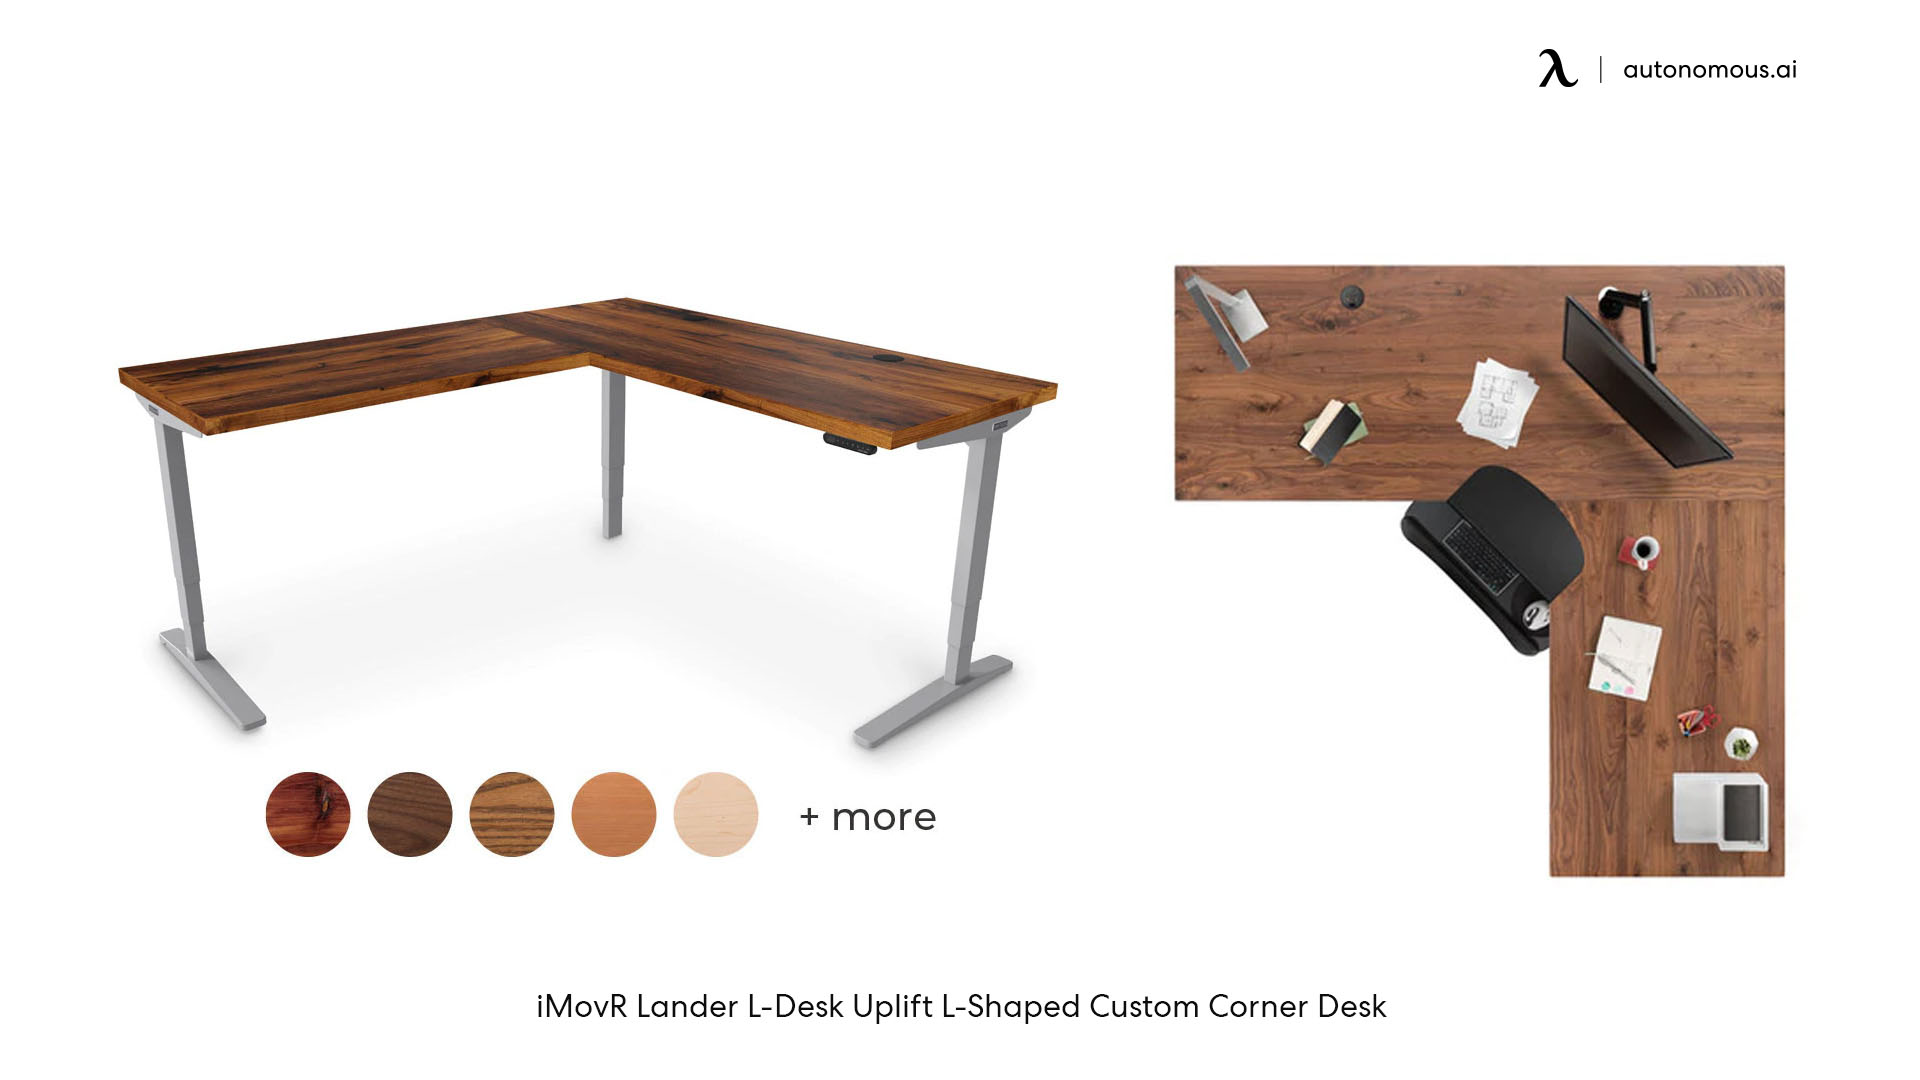 Uplift L-Shaped Custom Corner Desk